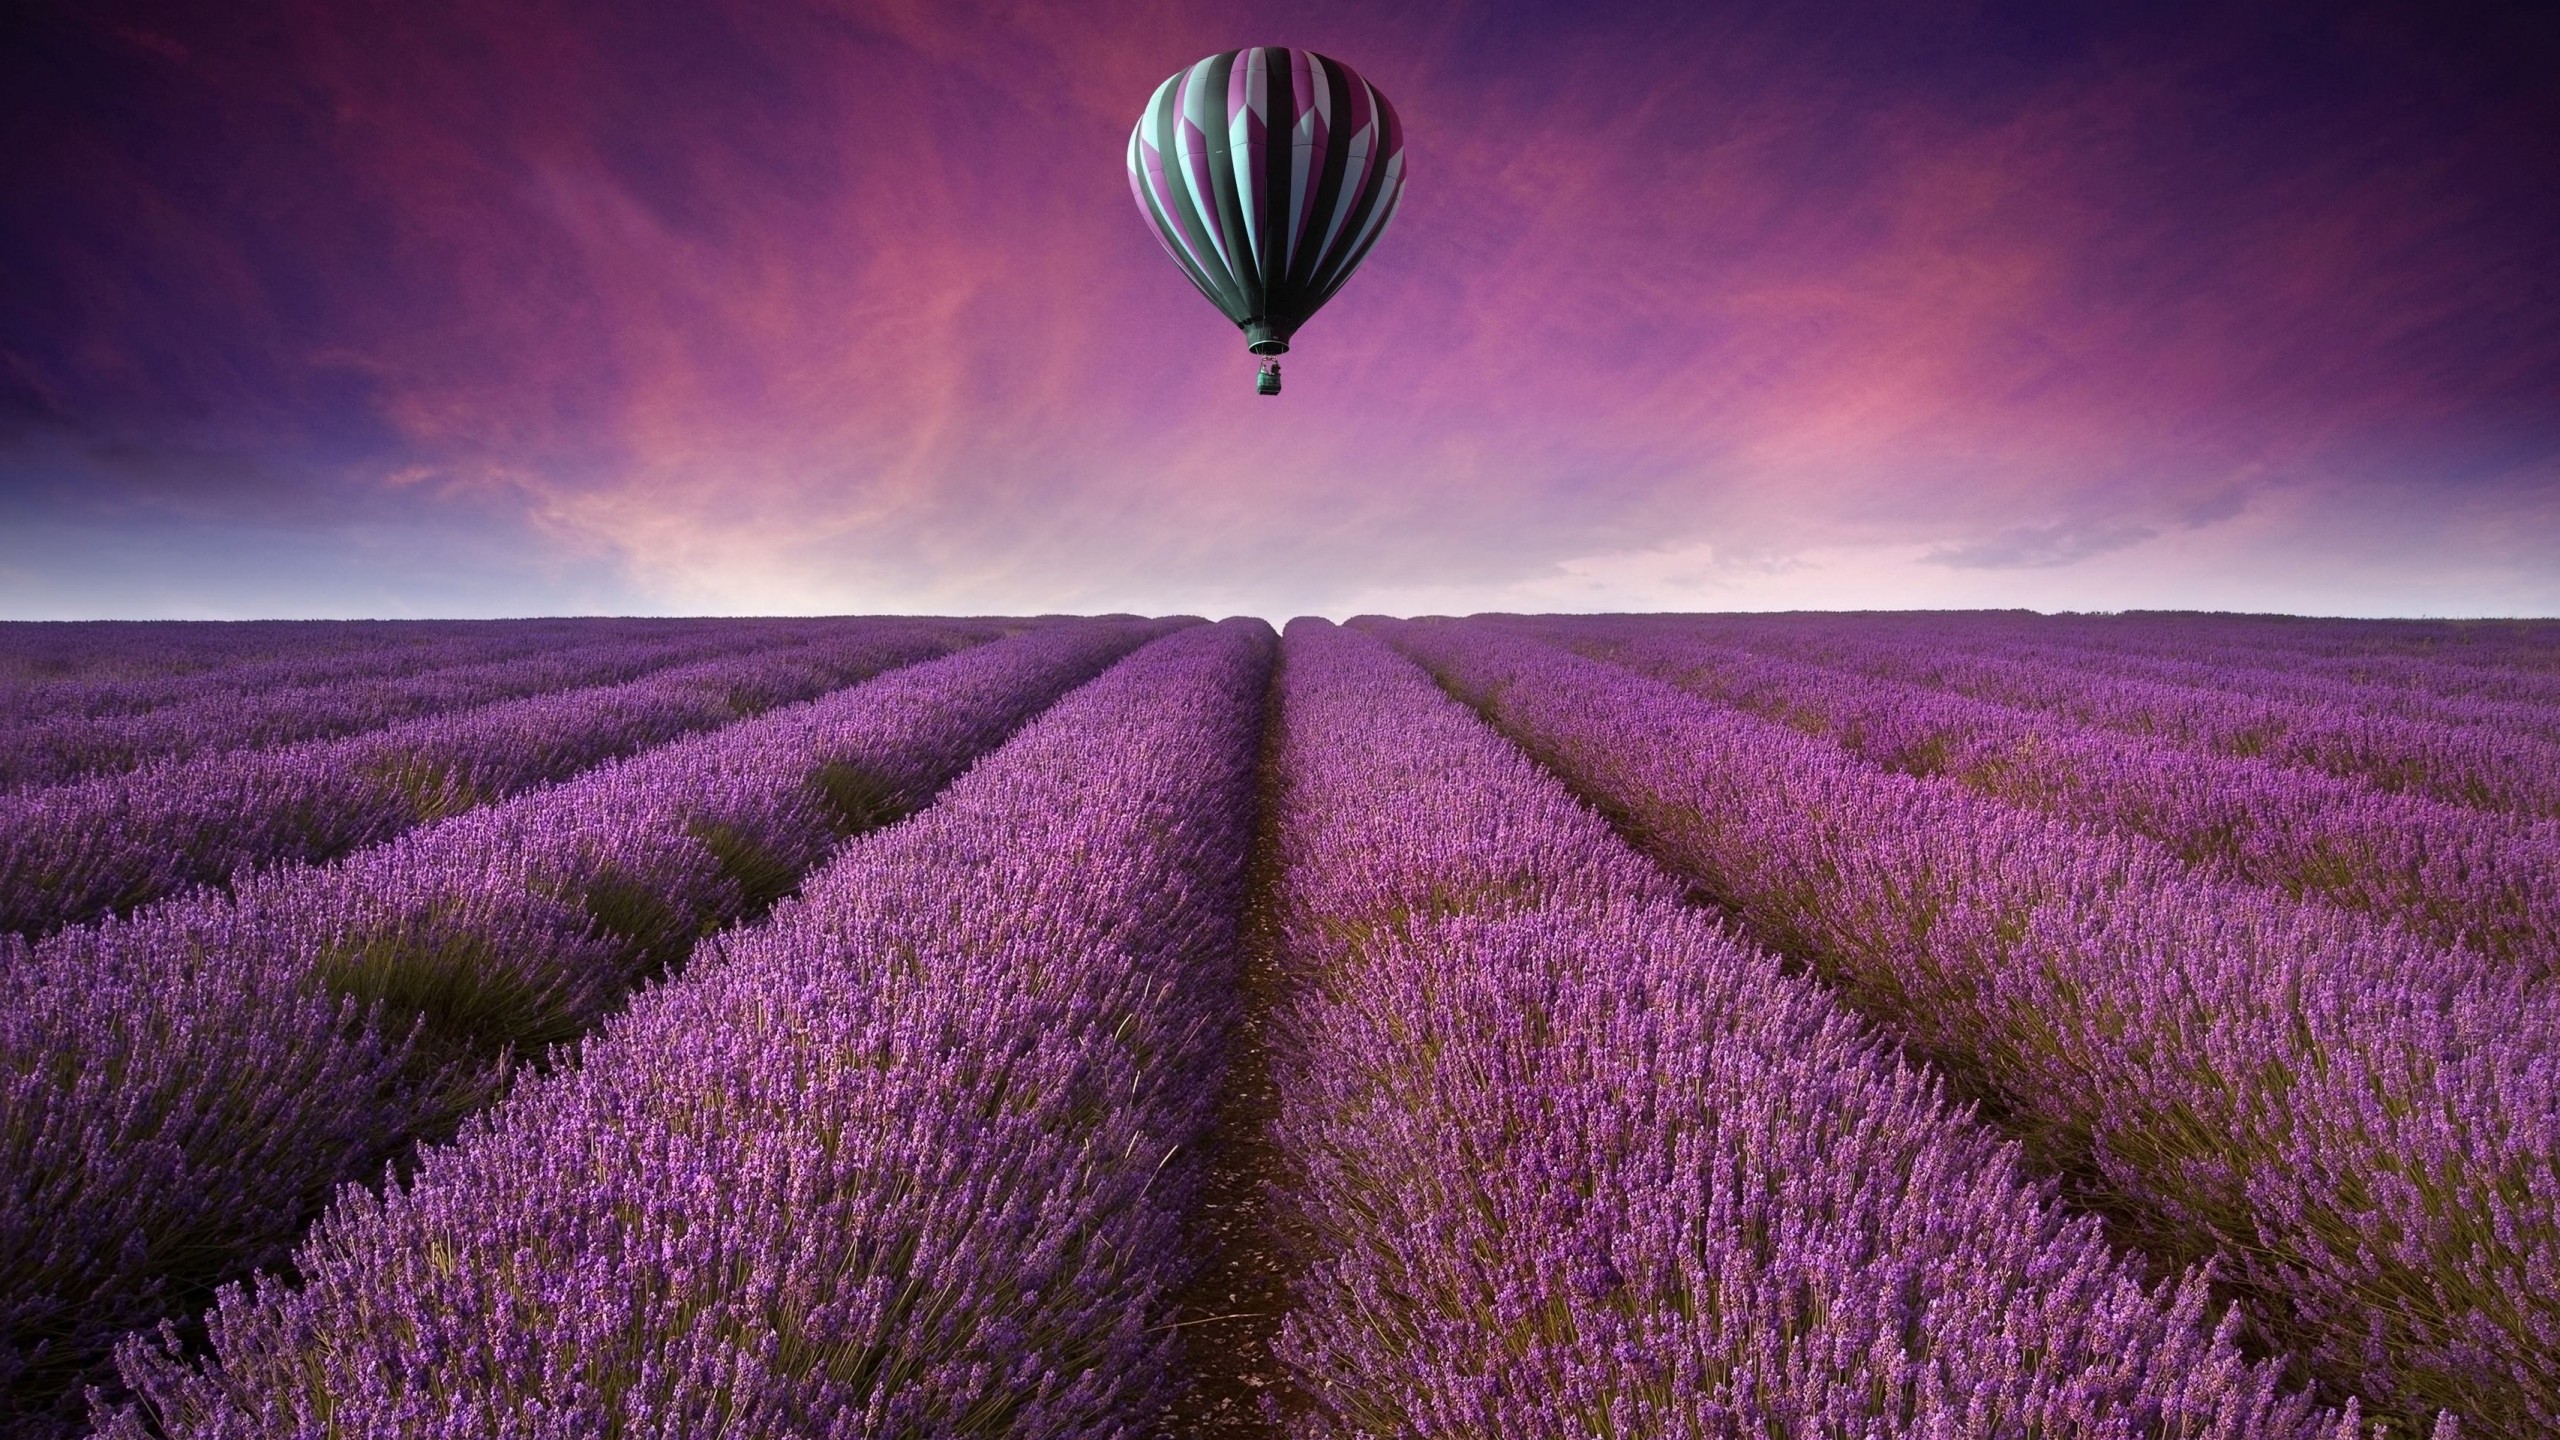 Hot Air Balloon Over Lavender Field Wallpaper for Desktop 2560x1440